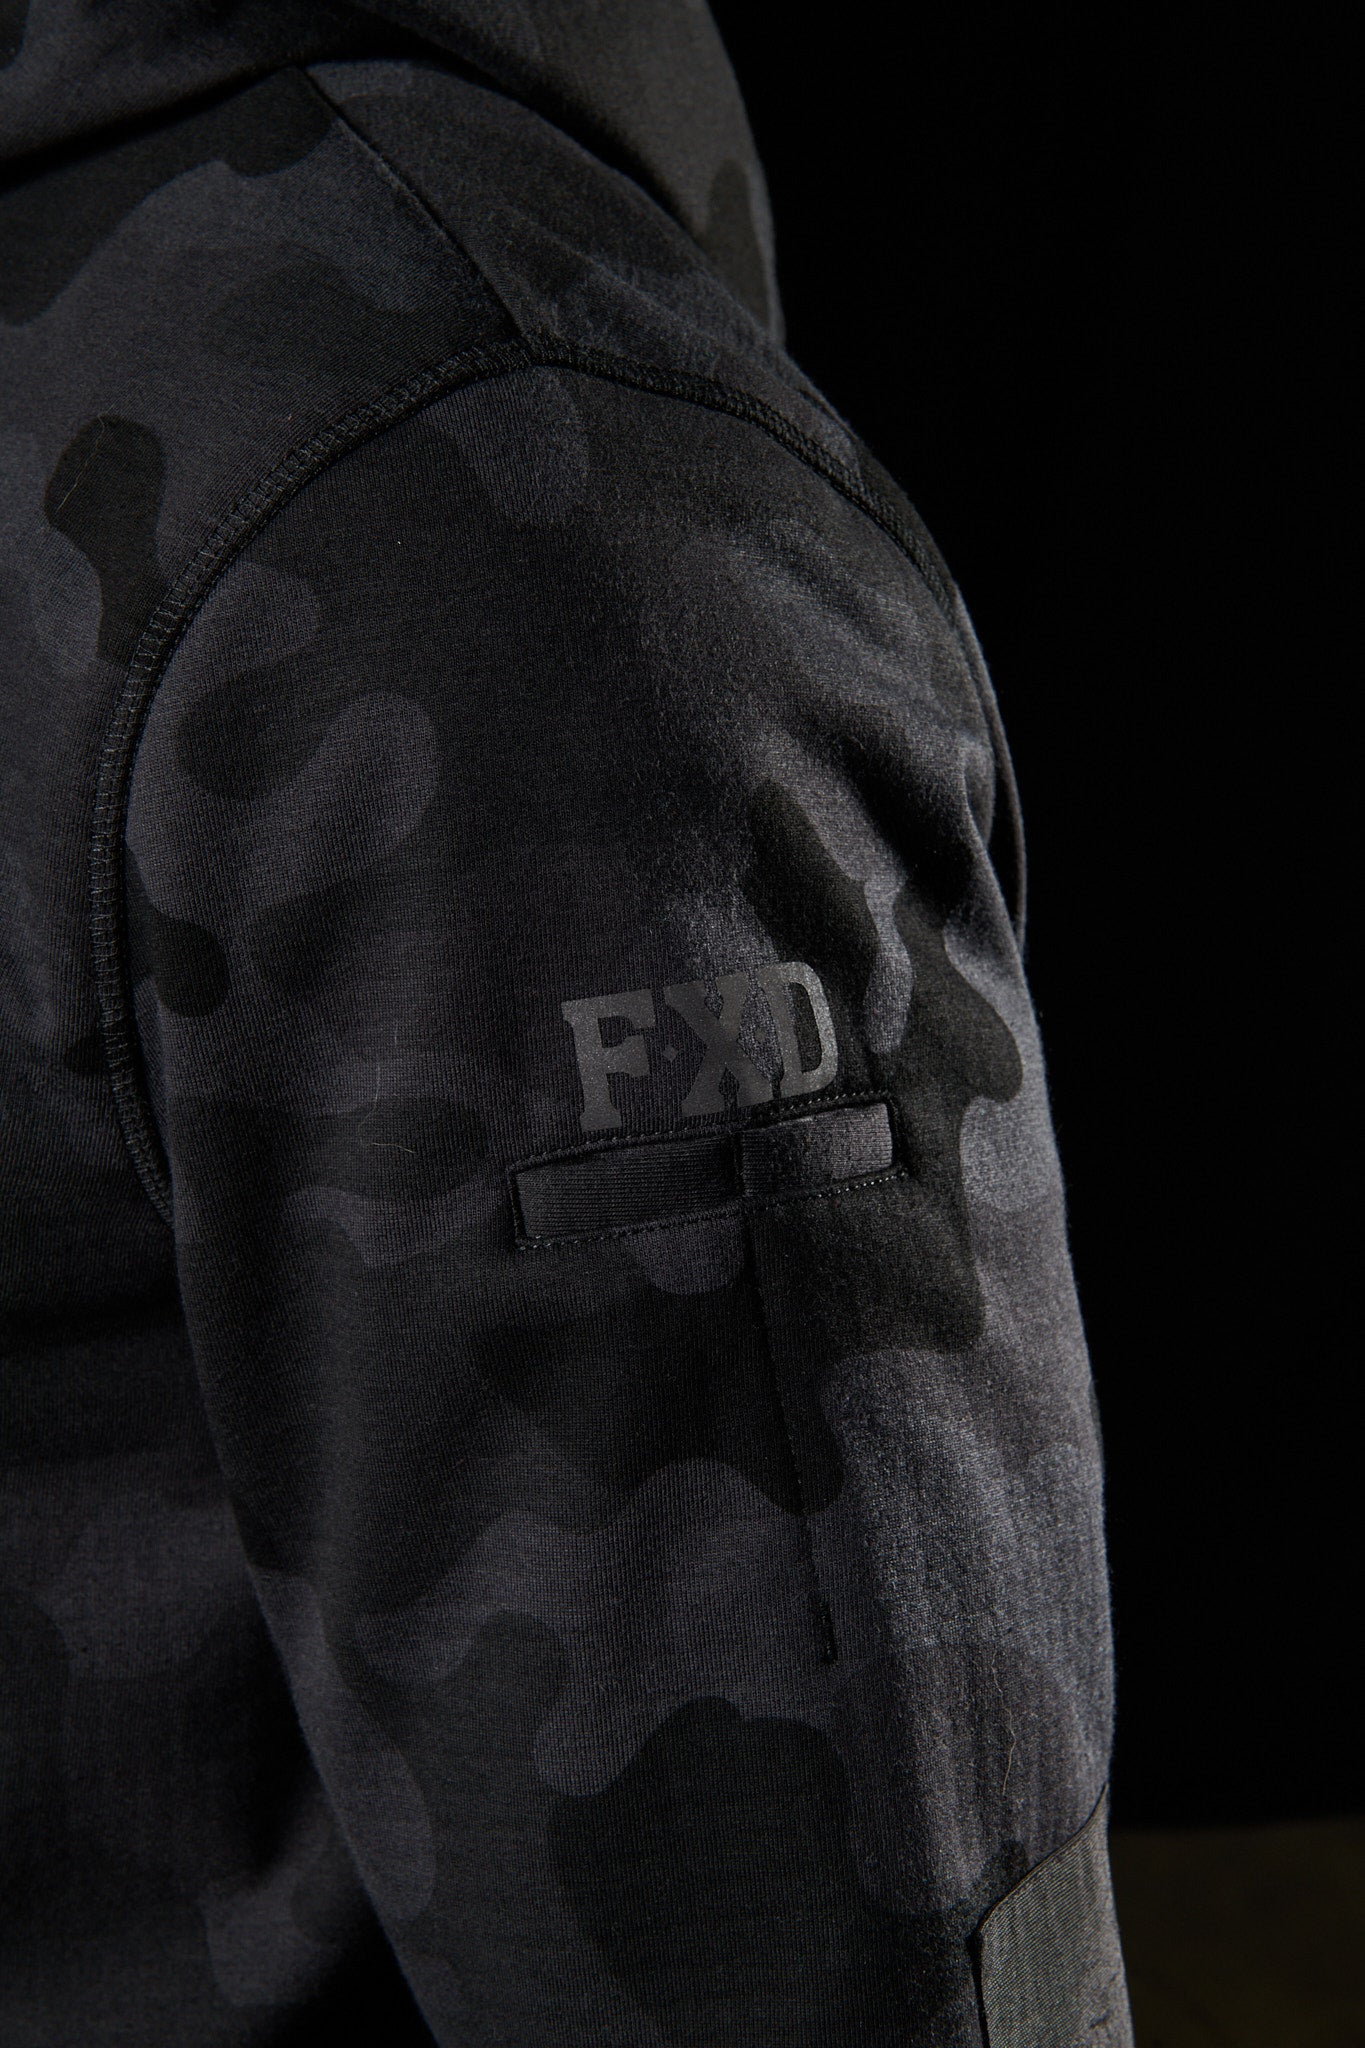 Sleeve detailing of the WF◆1 Black Camo